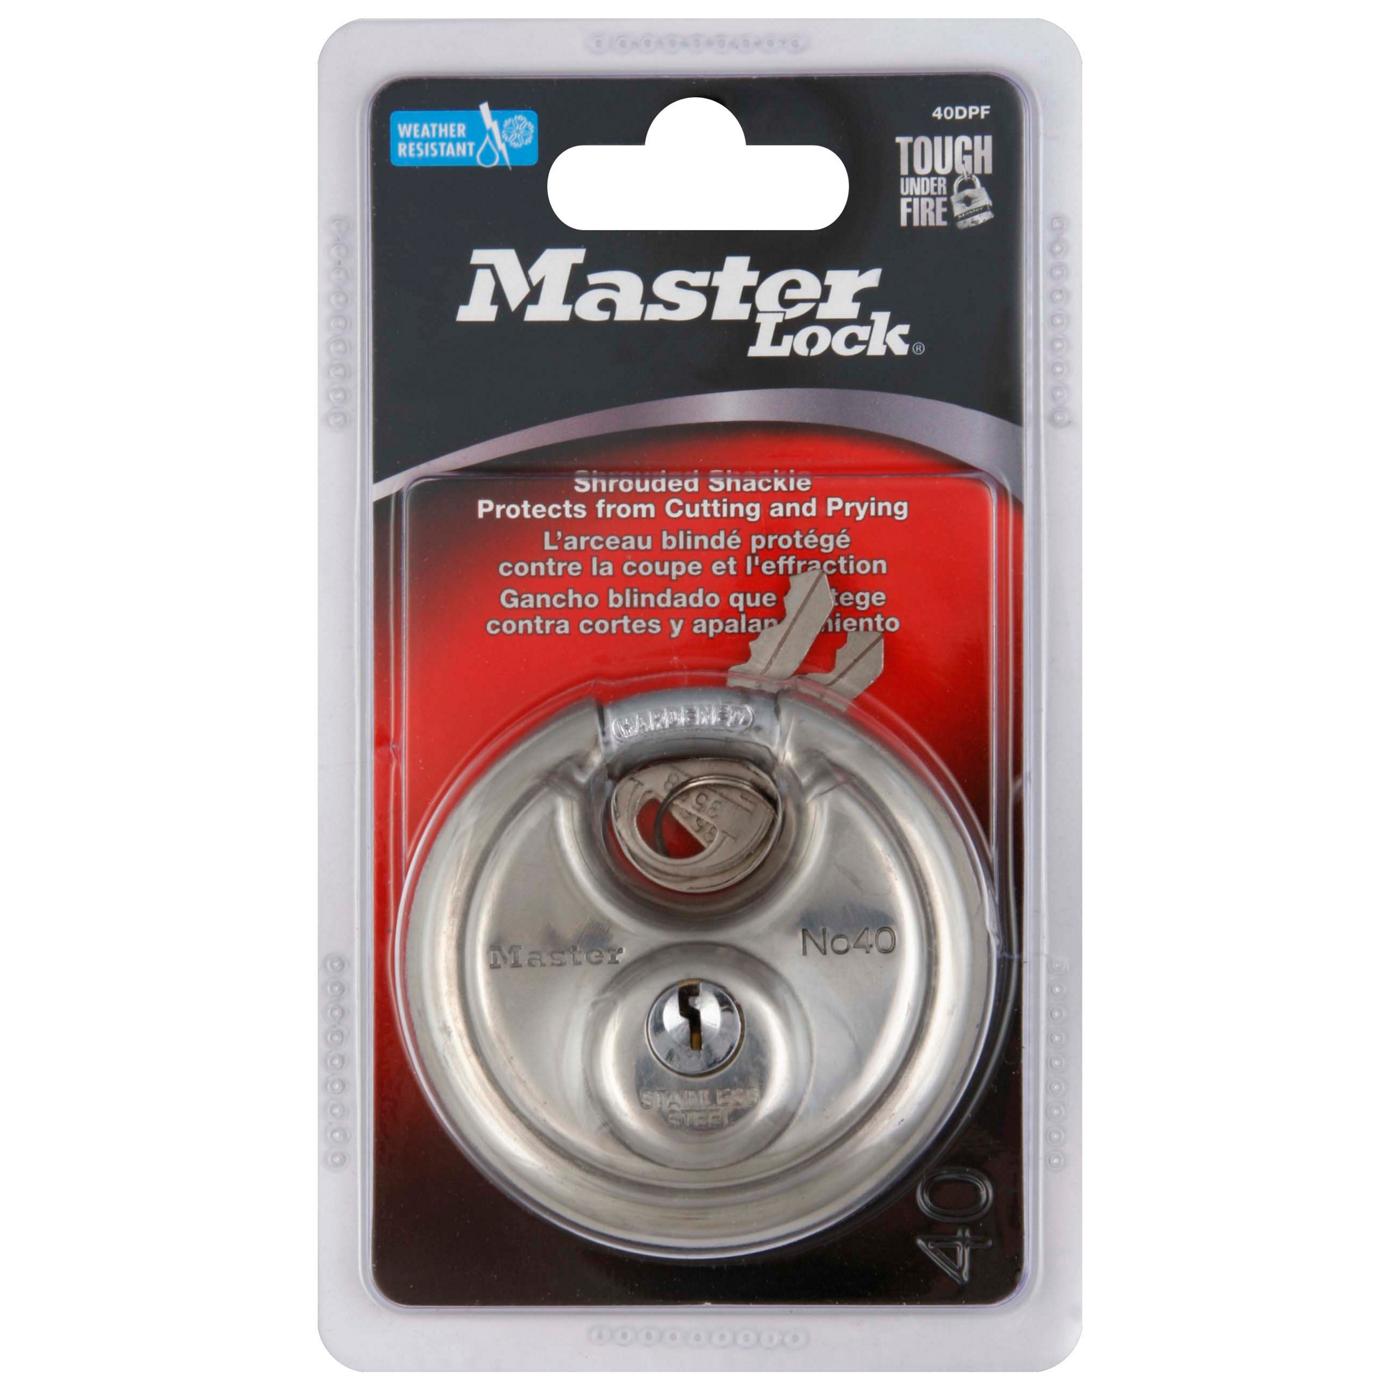 Master Lock 40DPF Round Padlock; image 1 of 2